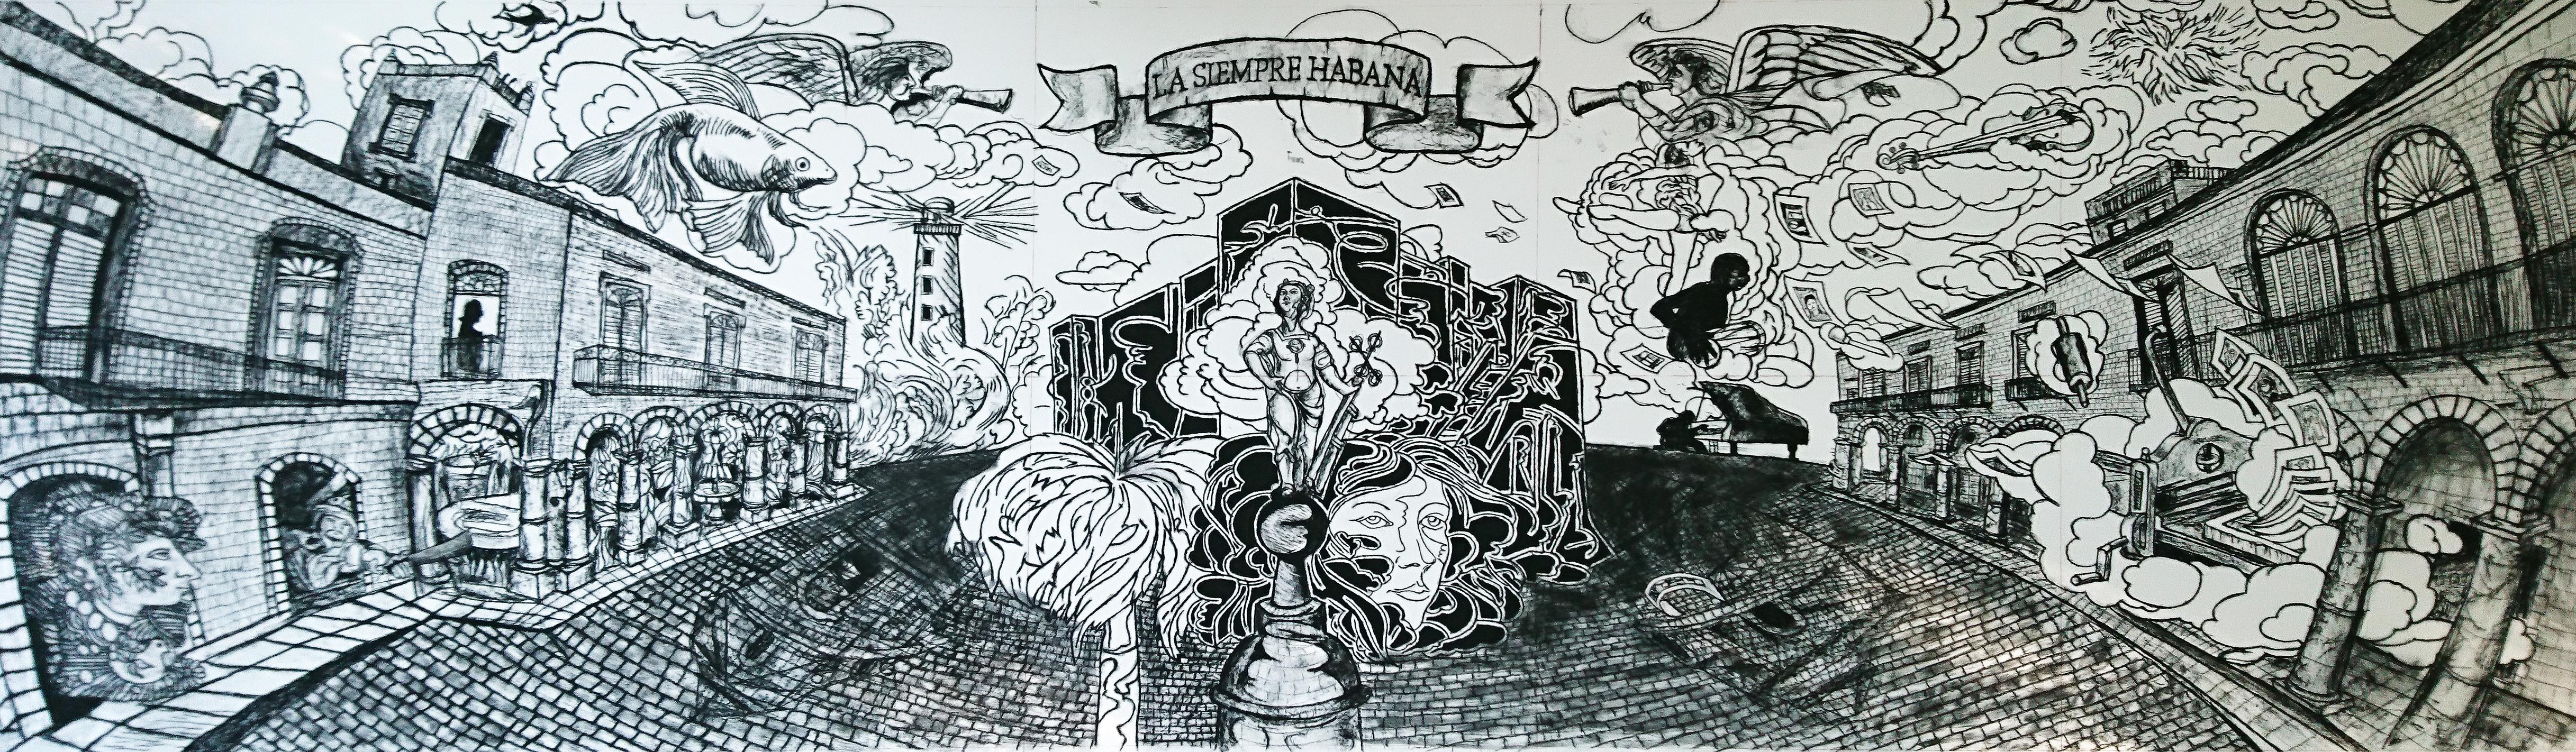 Luis Miguel Valdes, "Symphony Always Havana", 2016, canvas 118x393in